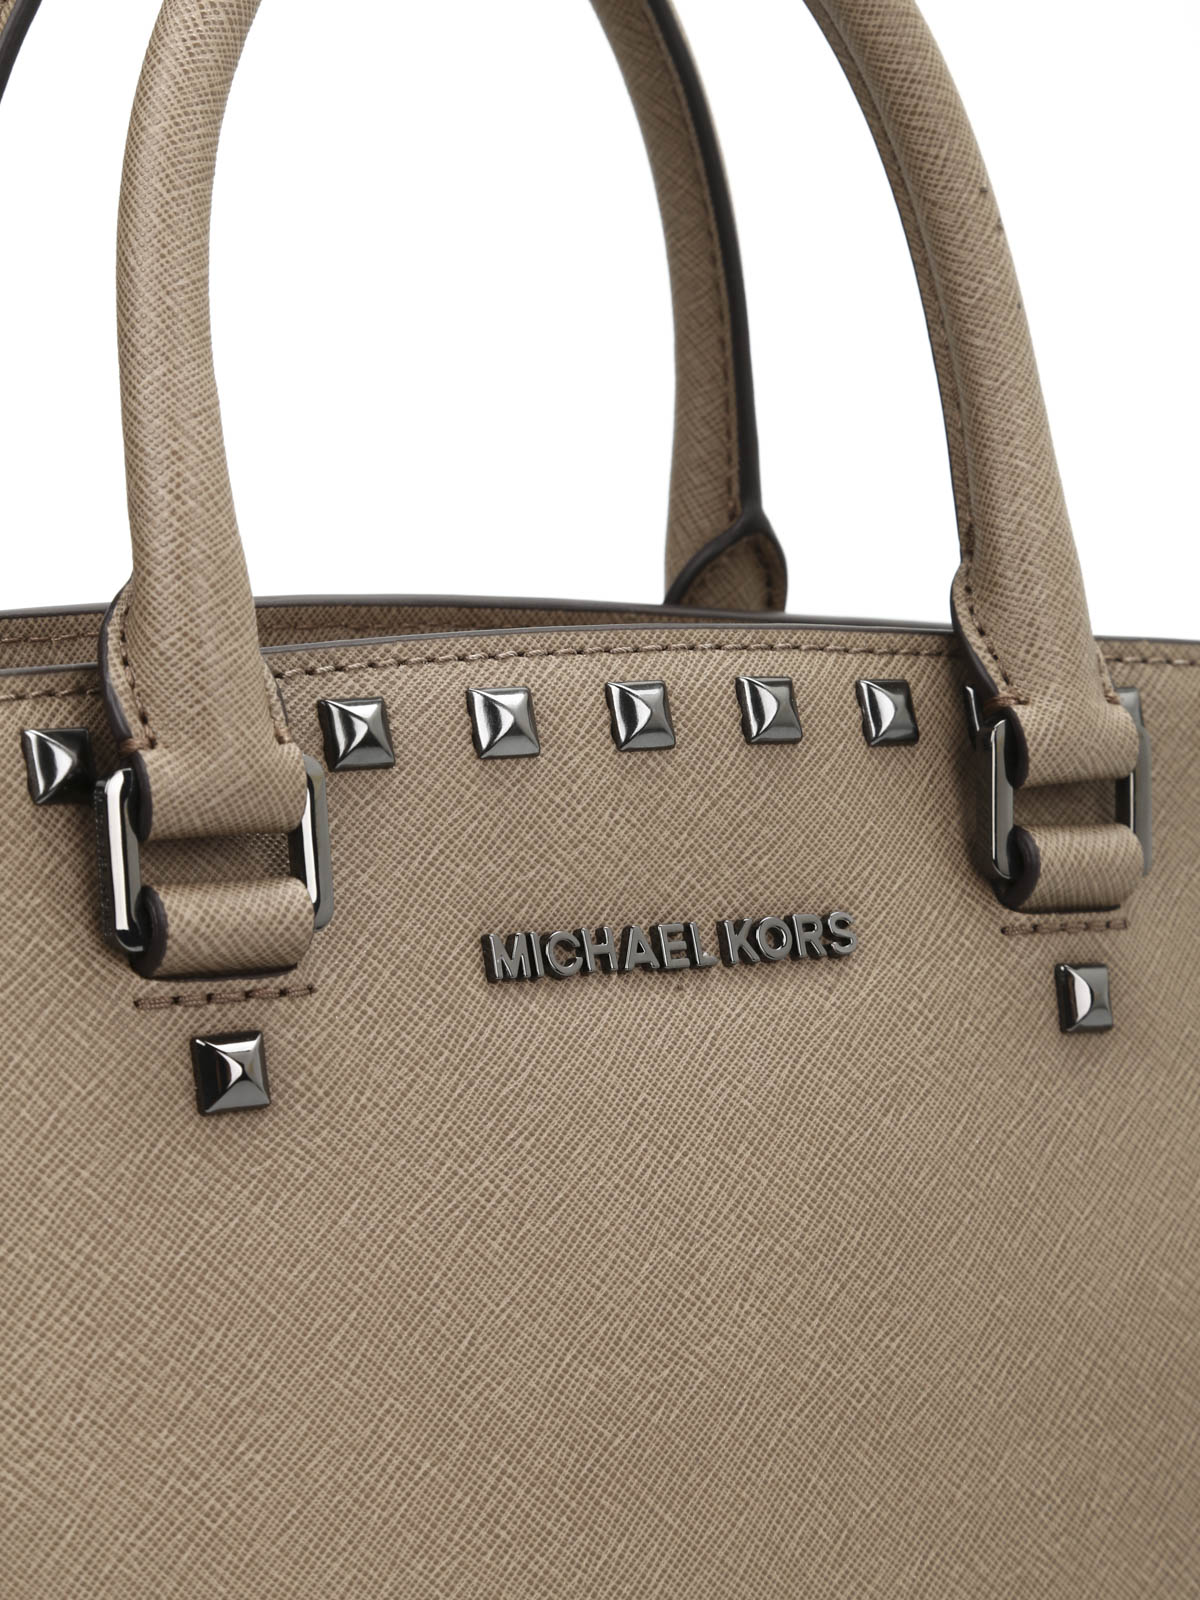 MICHAEL KORS Crossbody Selma Medium Studded Saffiano Leather